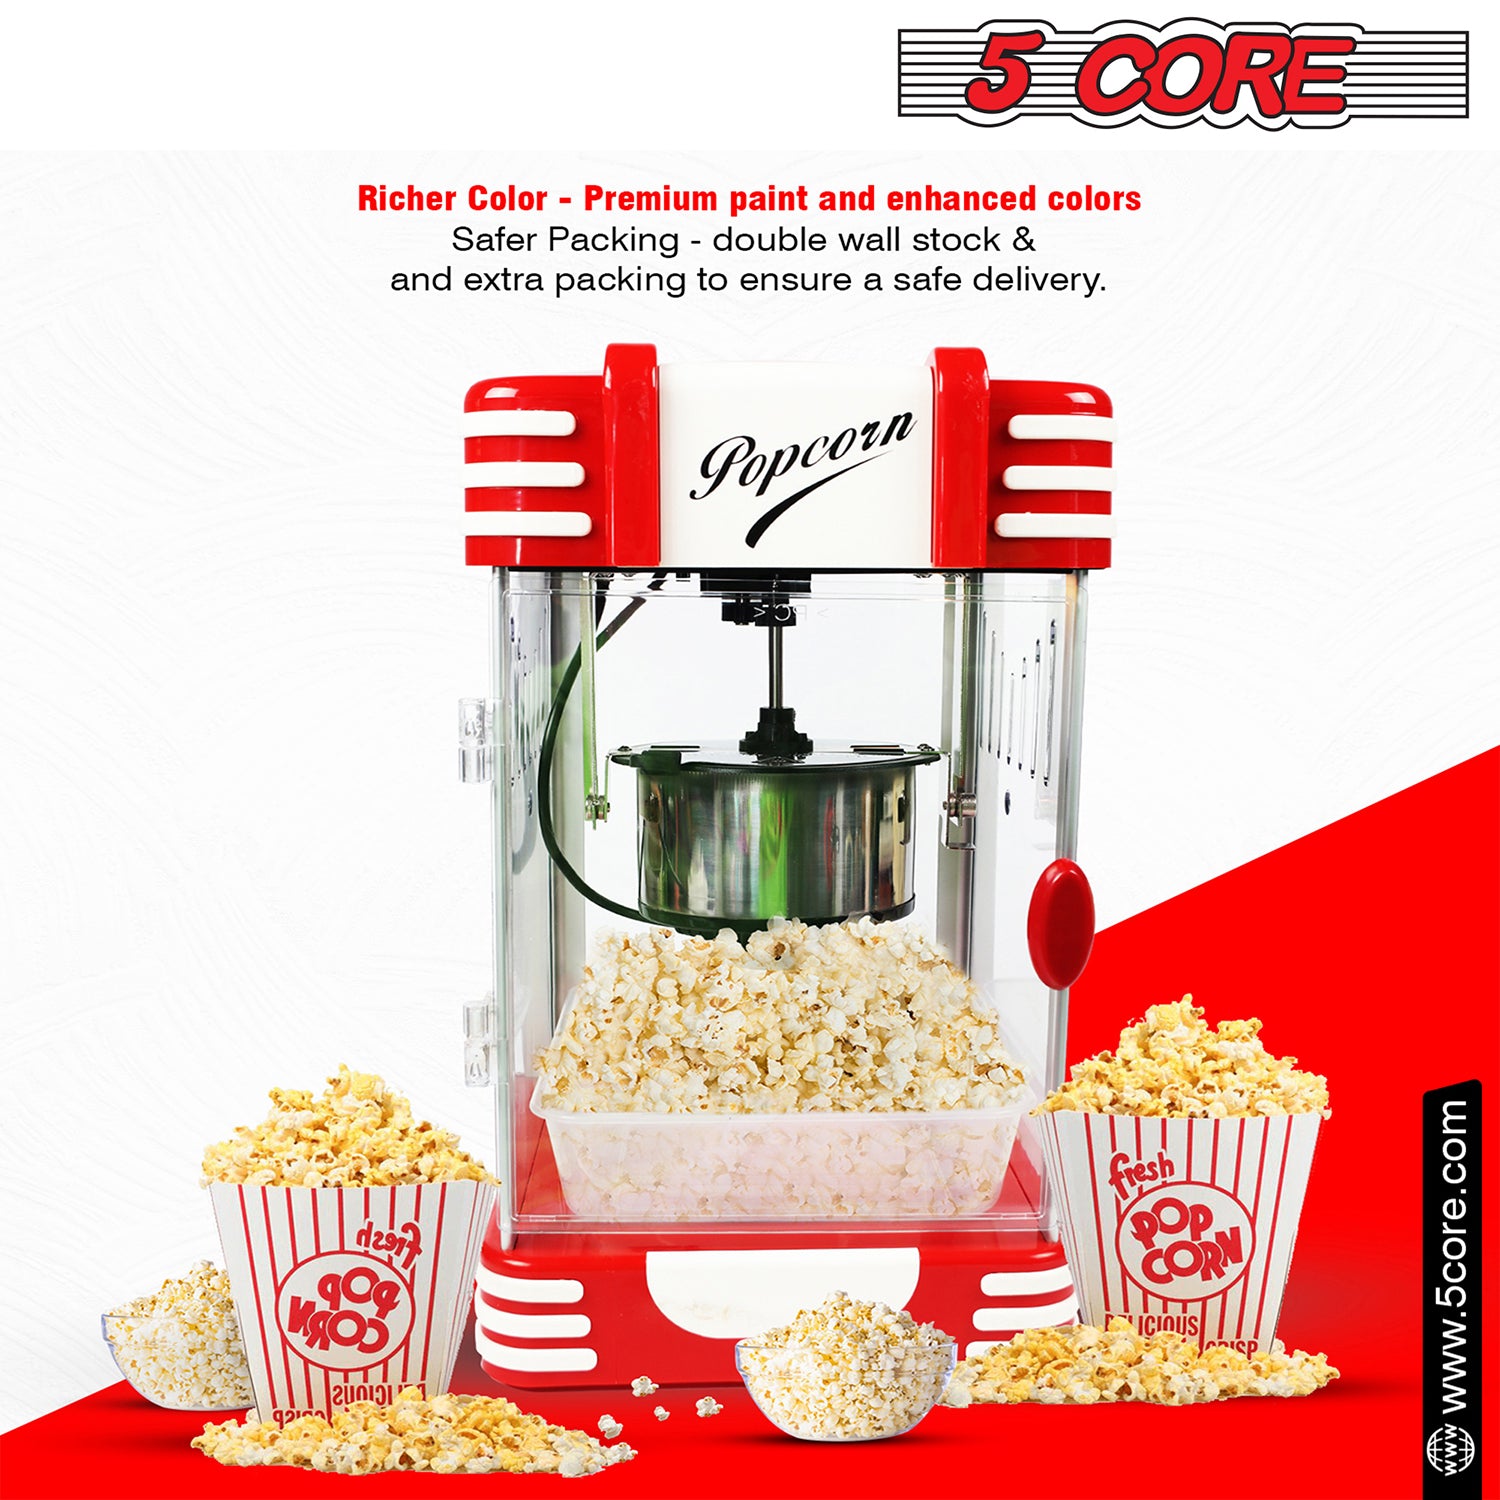 5Core Theater Style PRO Popcorn Machine Electric Hot Oil Popper 4 Oz Kettle 300W